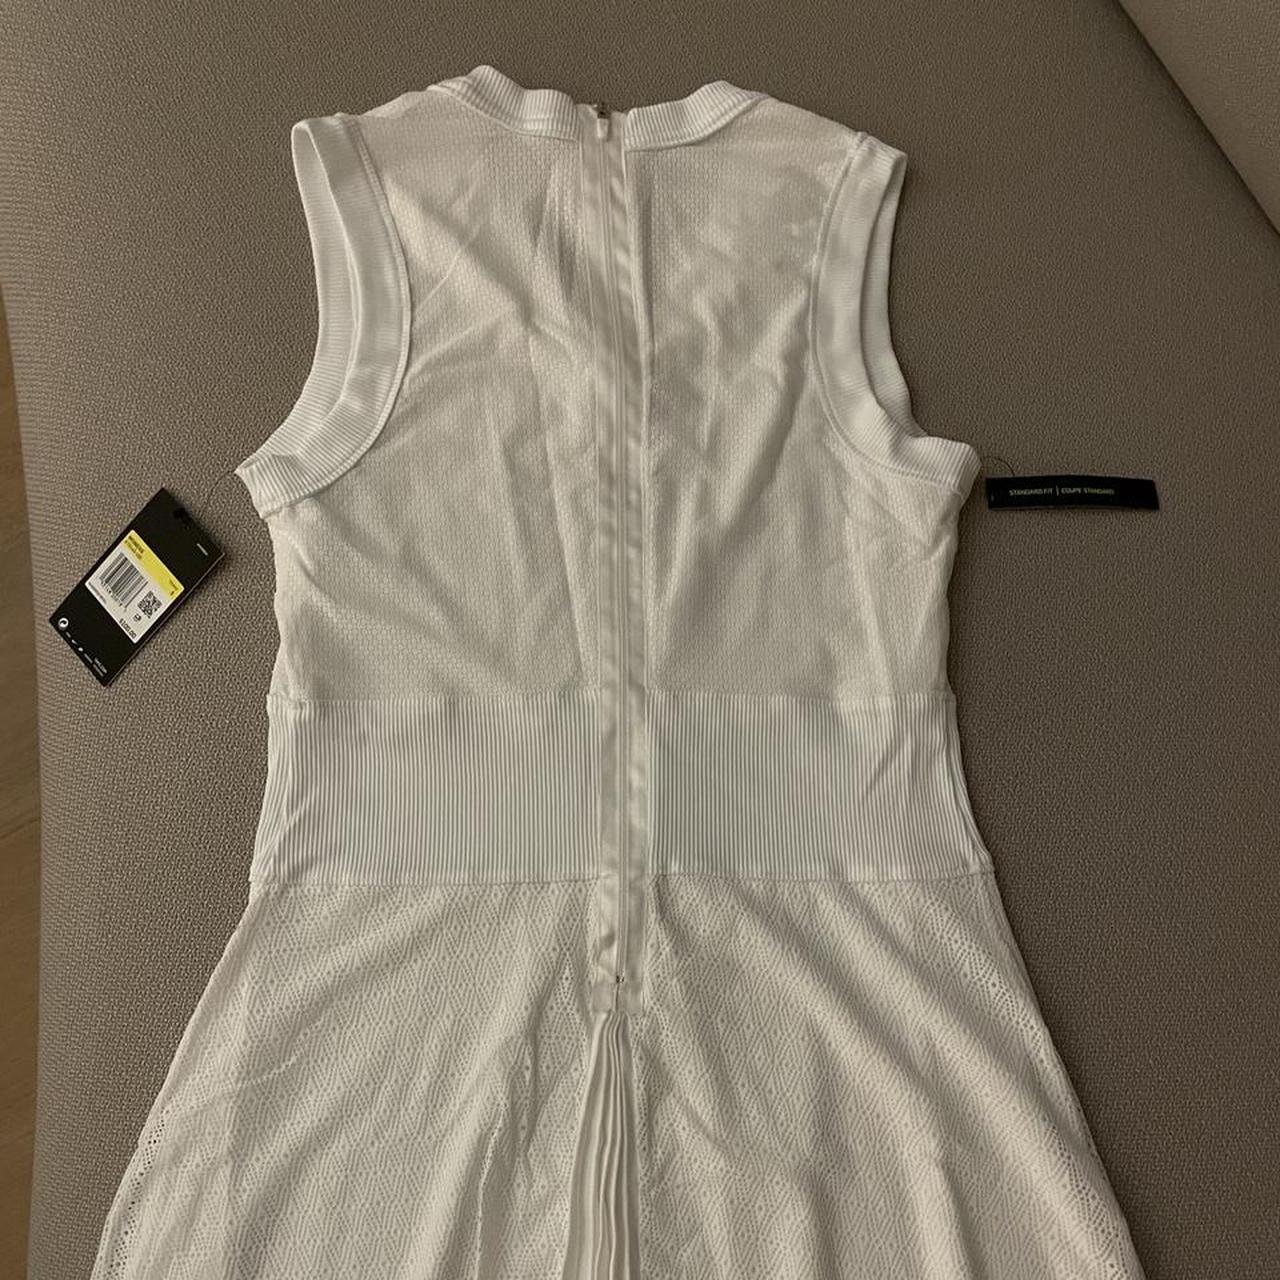 Product Image 3 - Nike white tennis dress w/